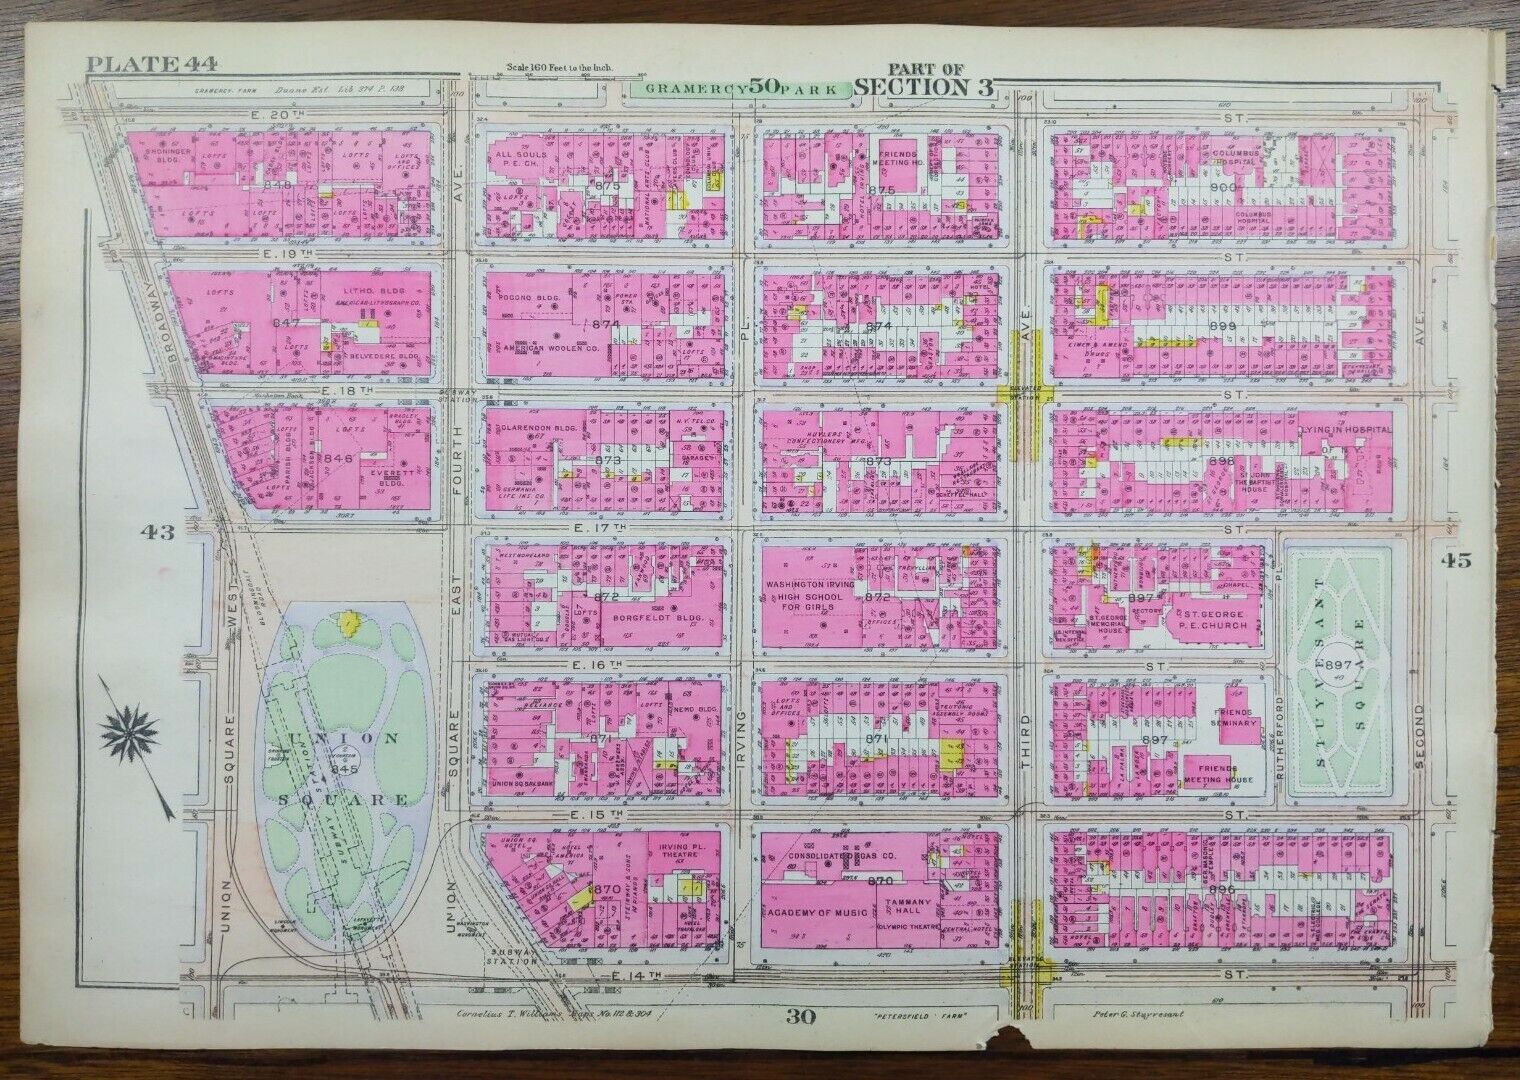 1916 FLAT IRON UNION SQUARE ST FRANCIS XAVIER MANHATTAN NEW YORK CITY Street Map